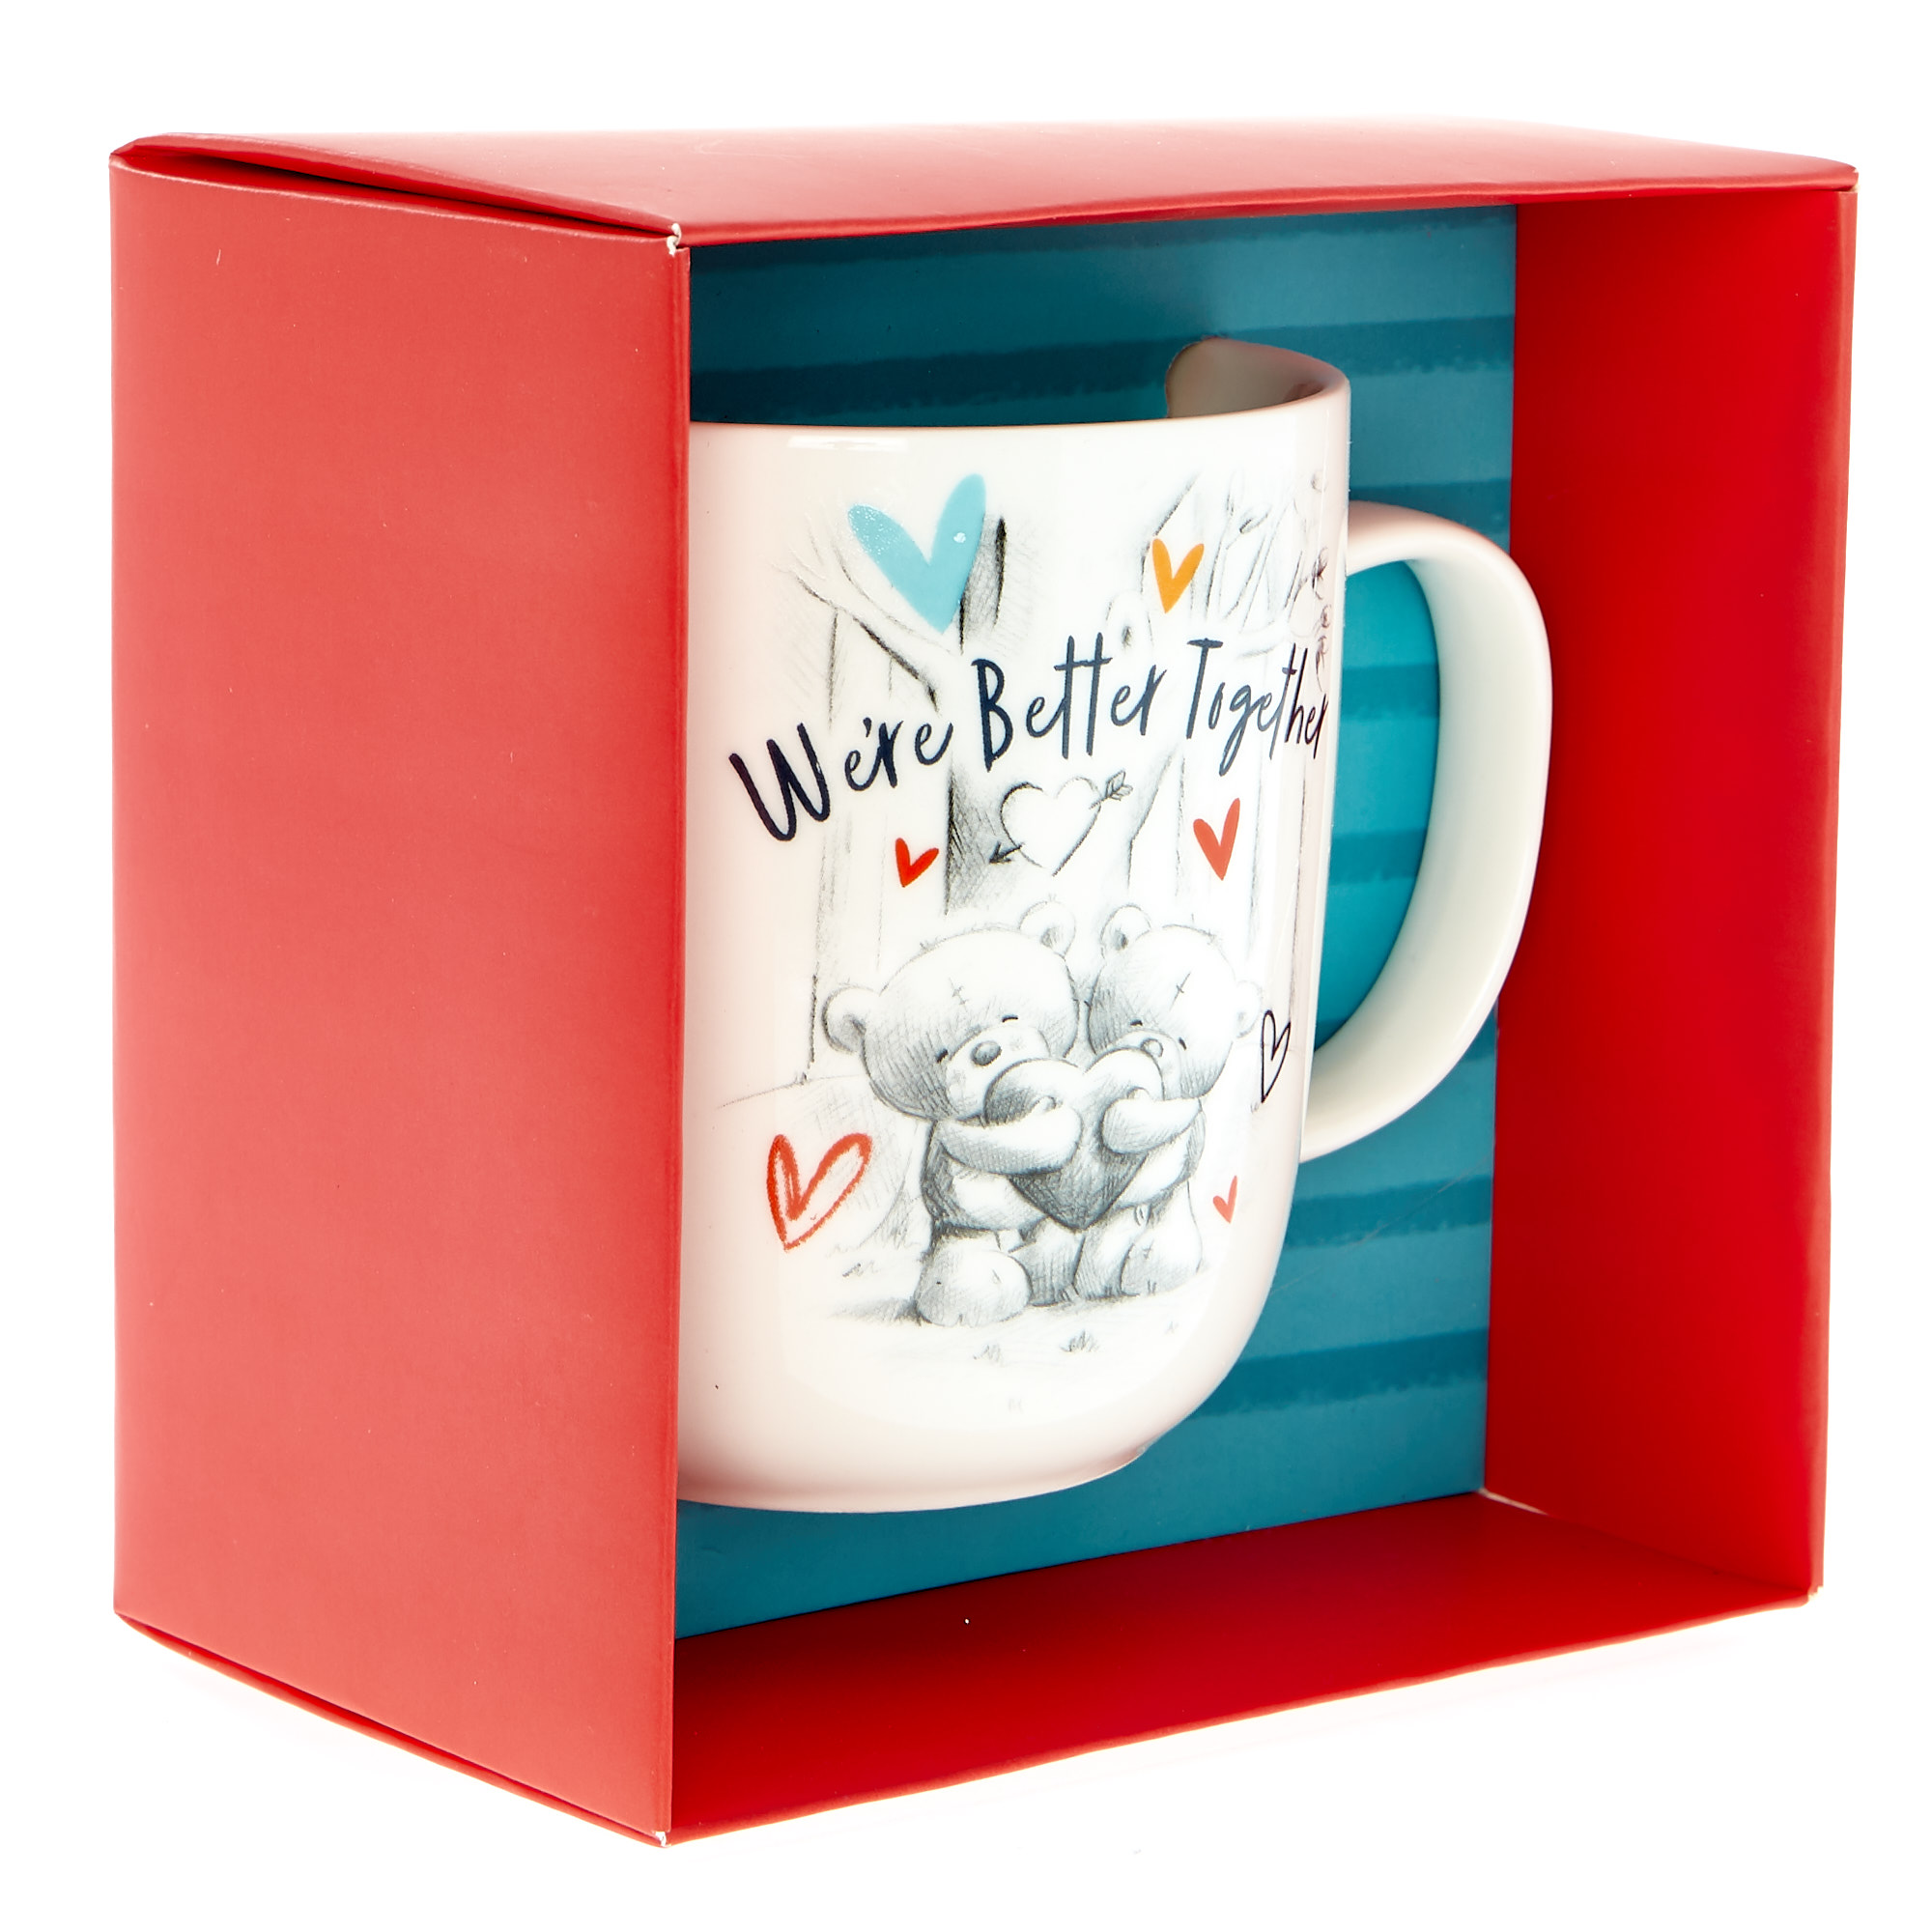 Love & Bear Hugs Mug In A Box